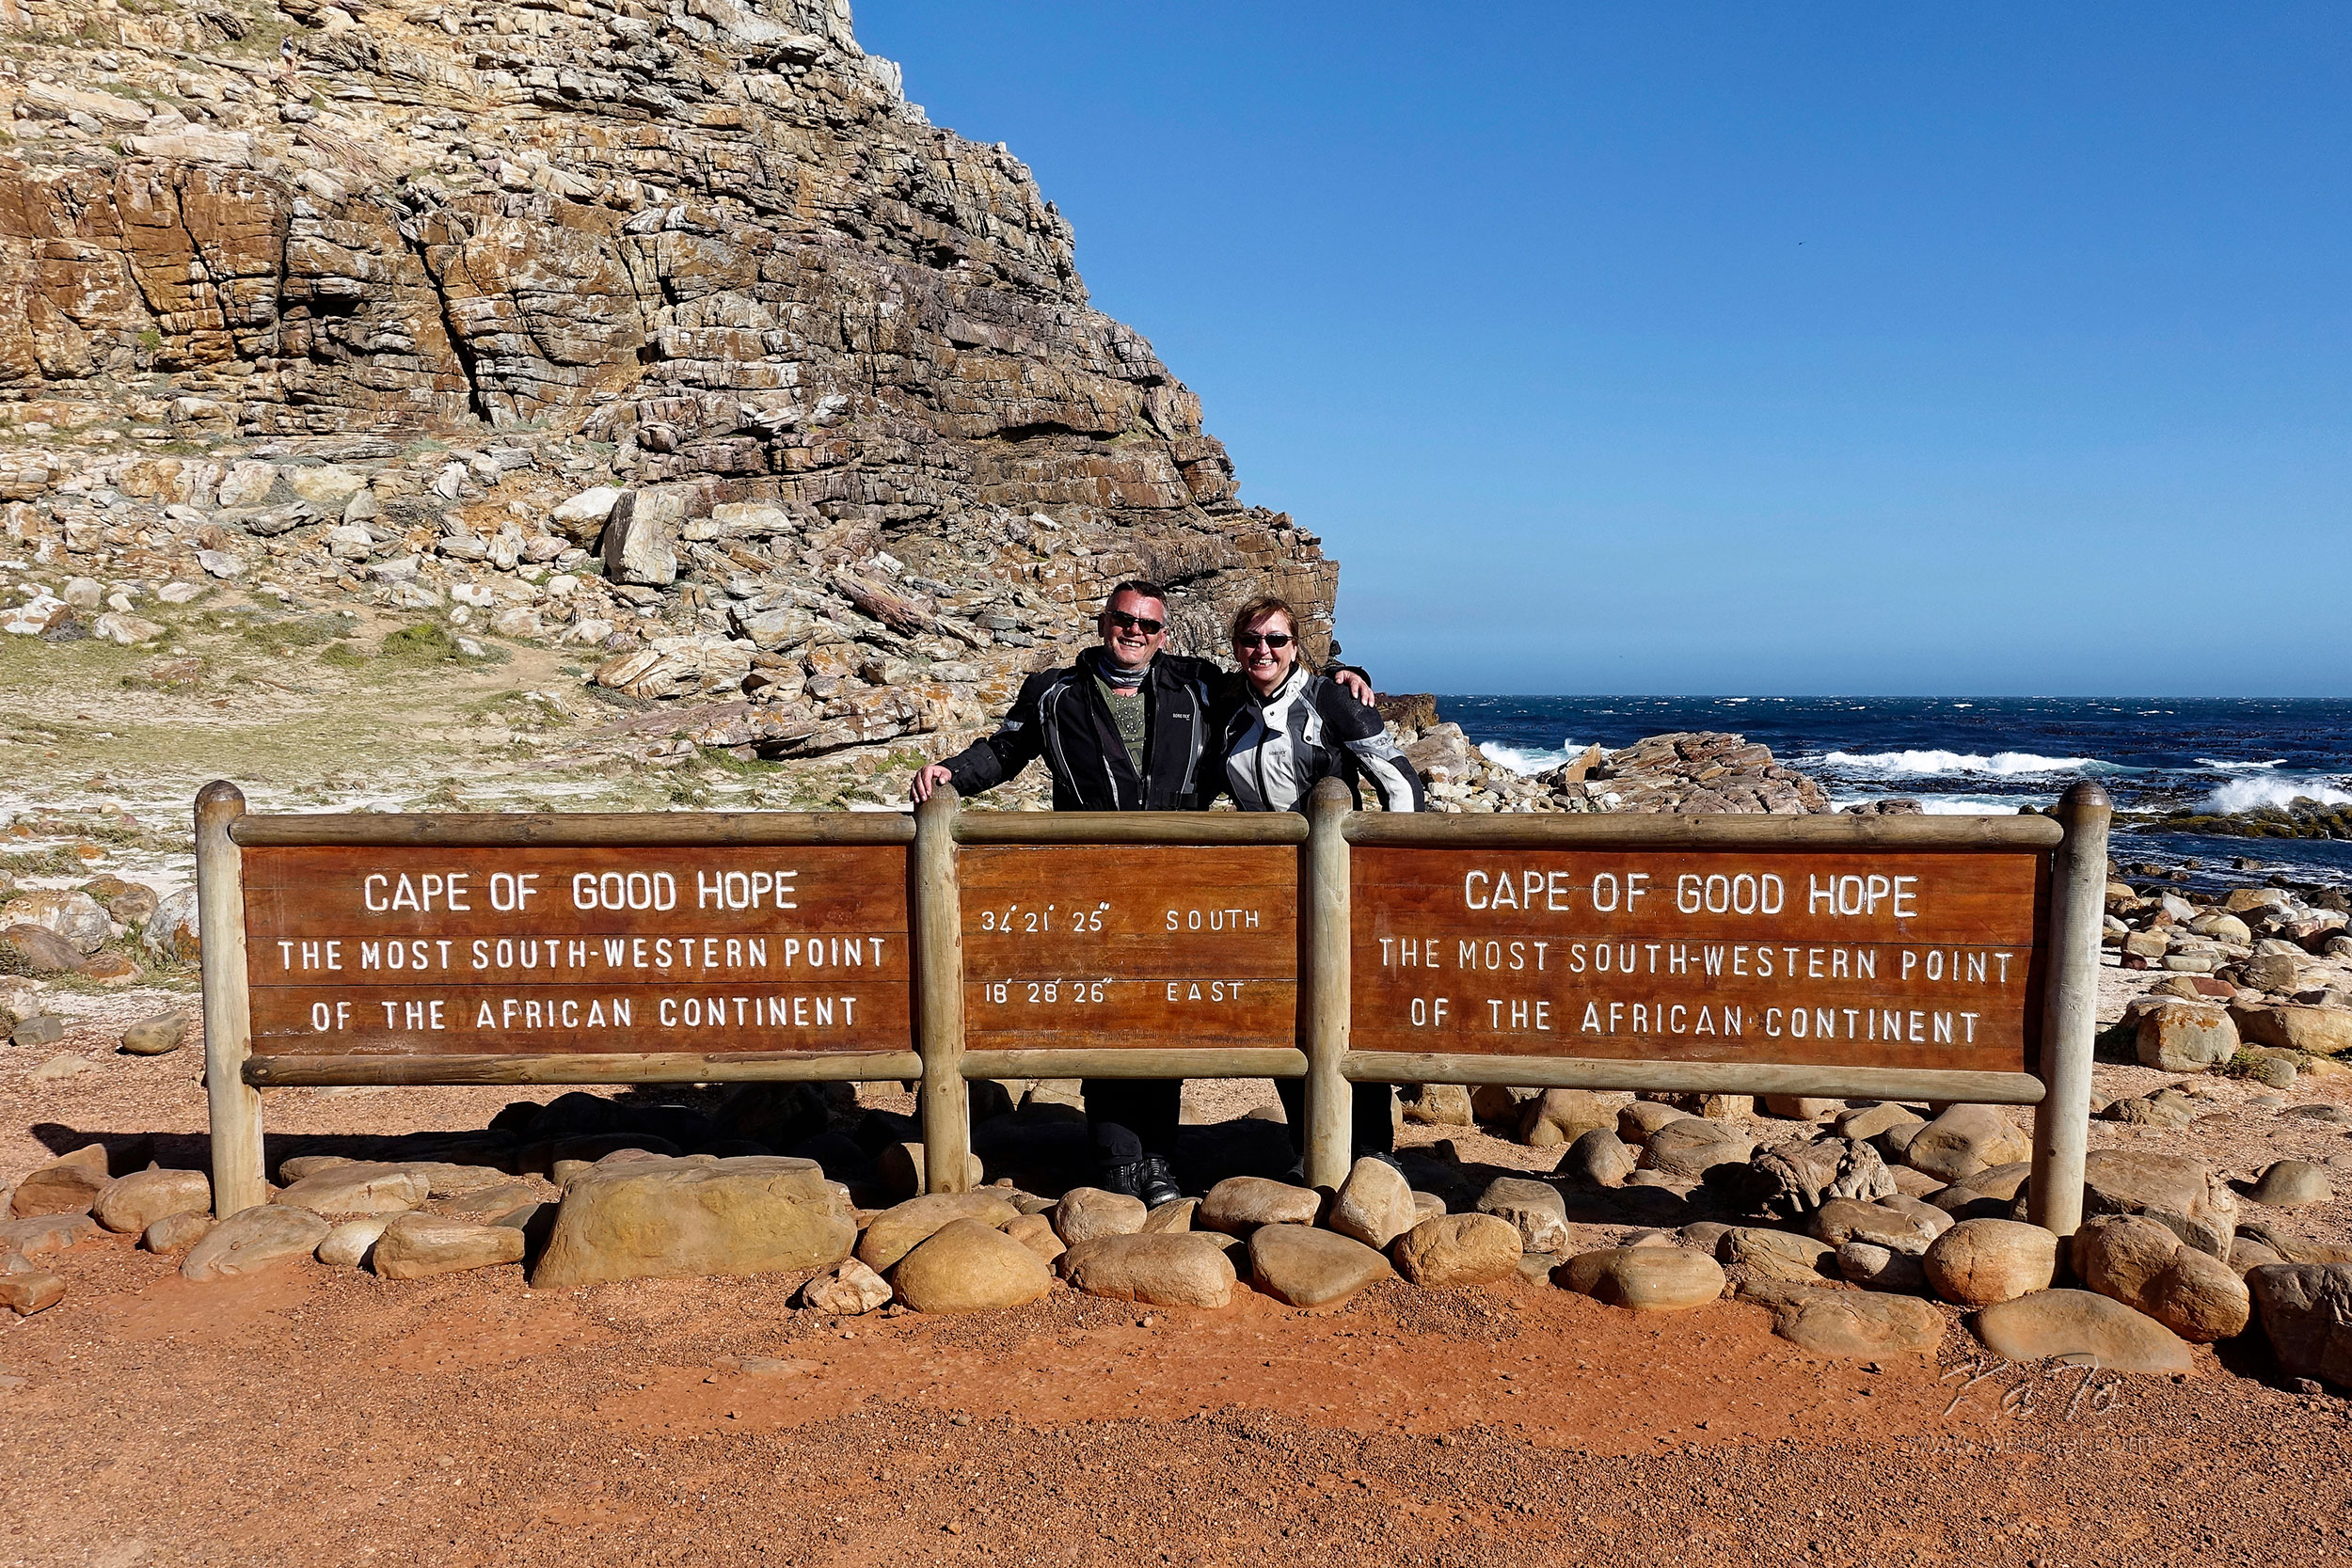 3470km through South Africa